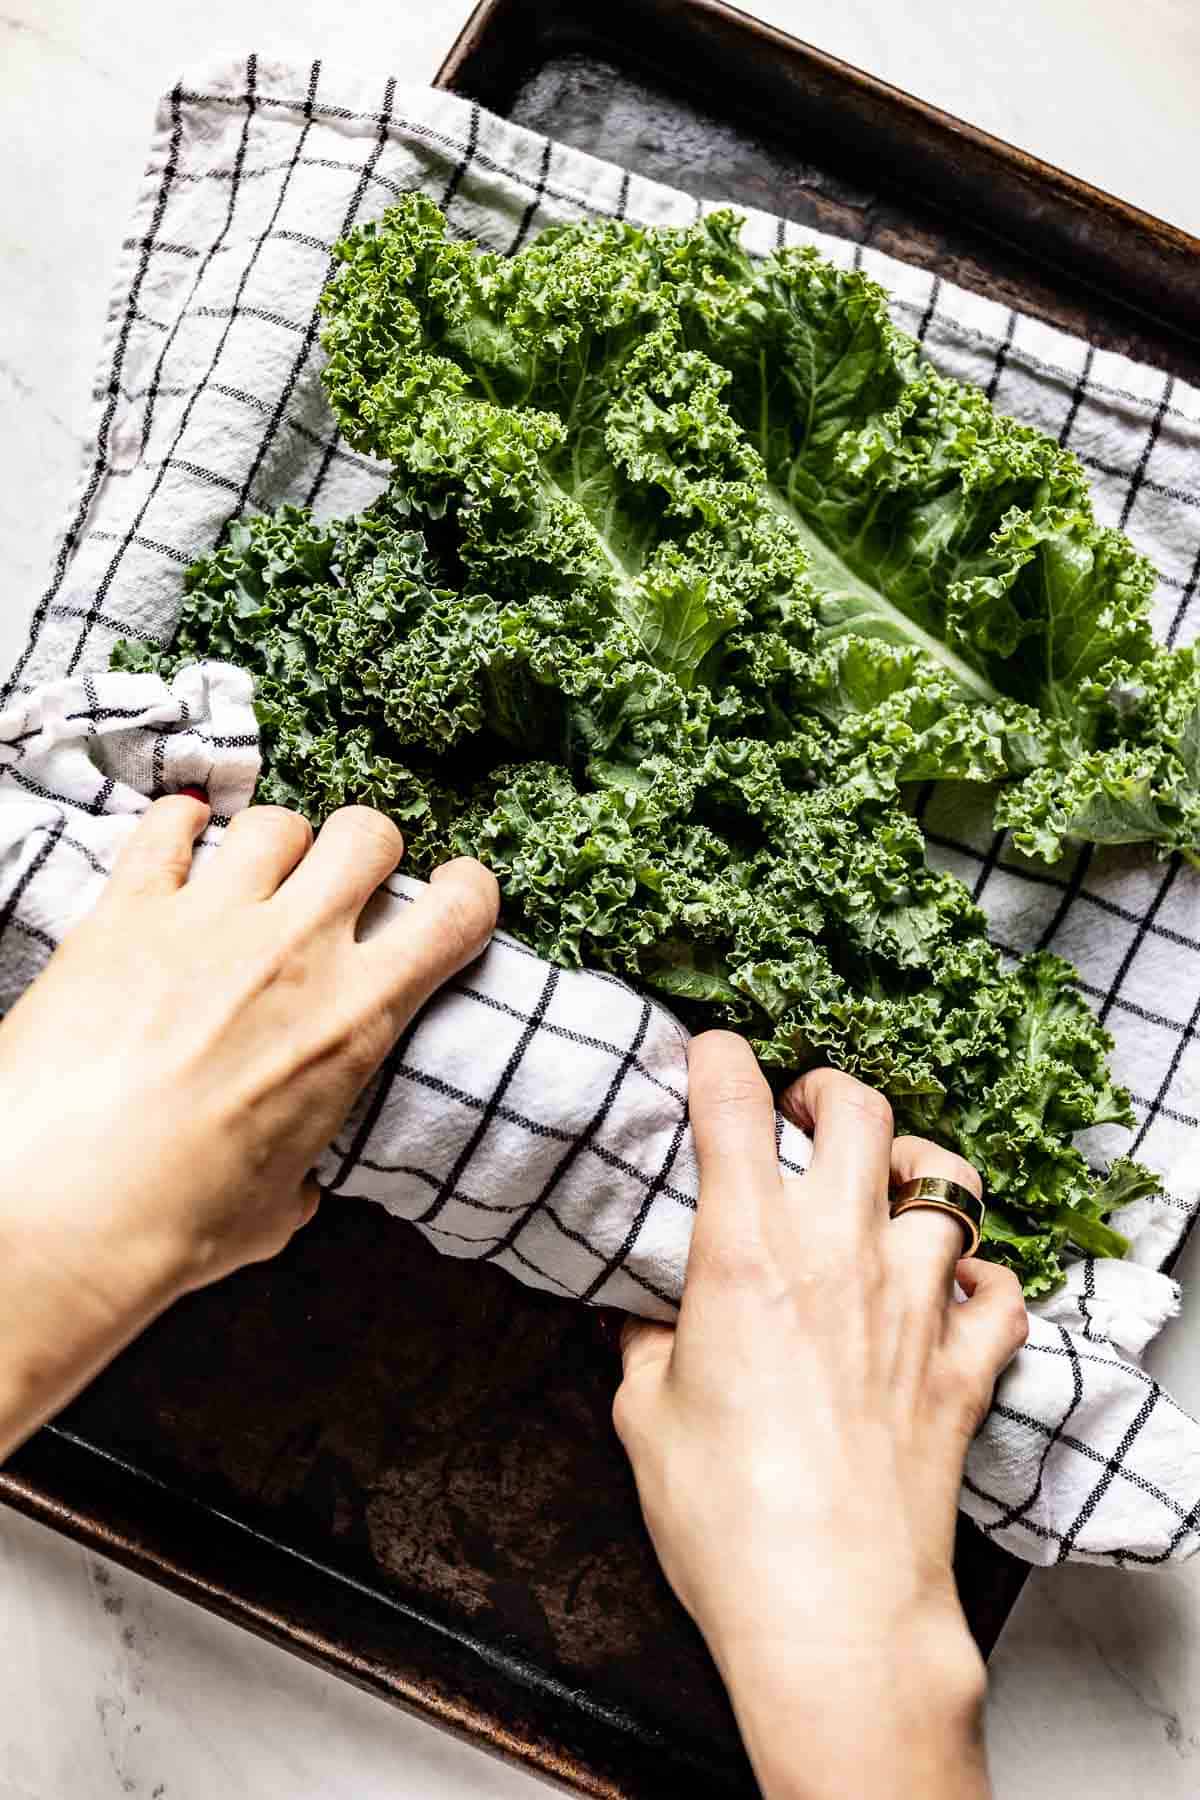 The Fastest Way To Destem Kale